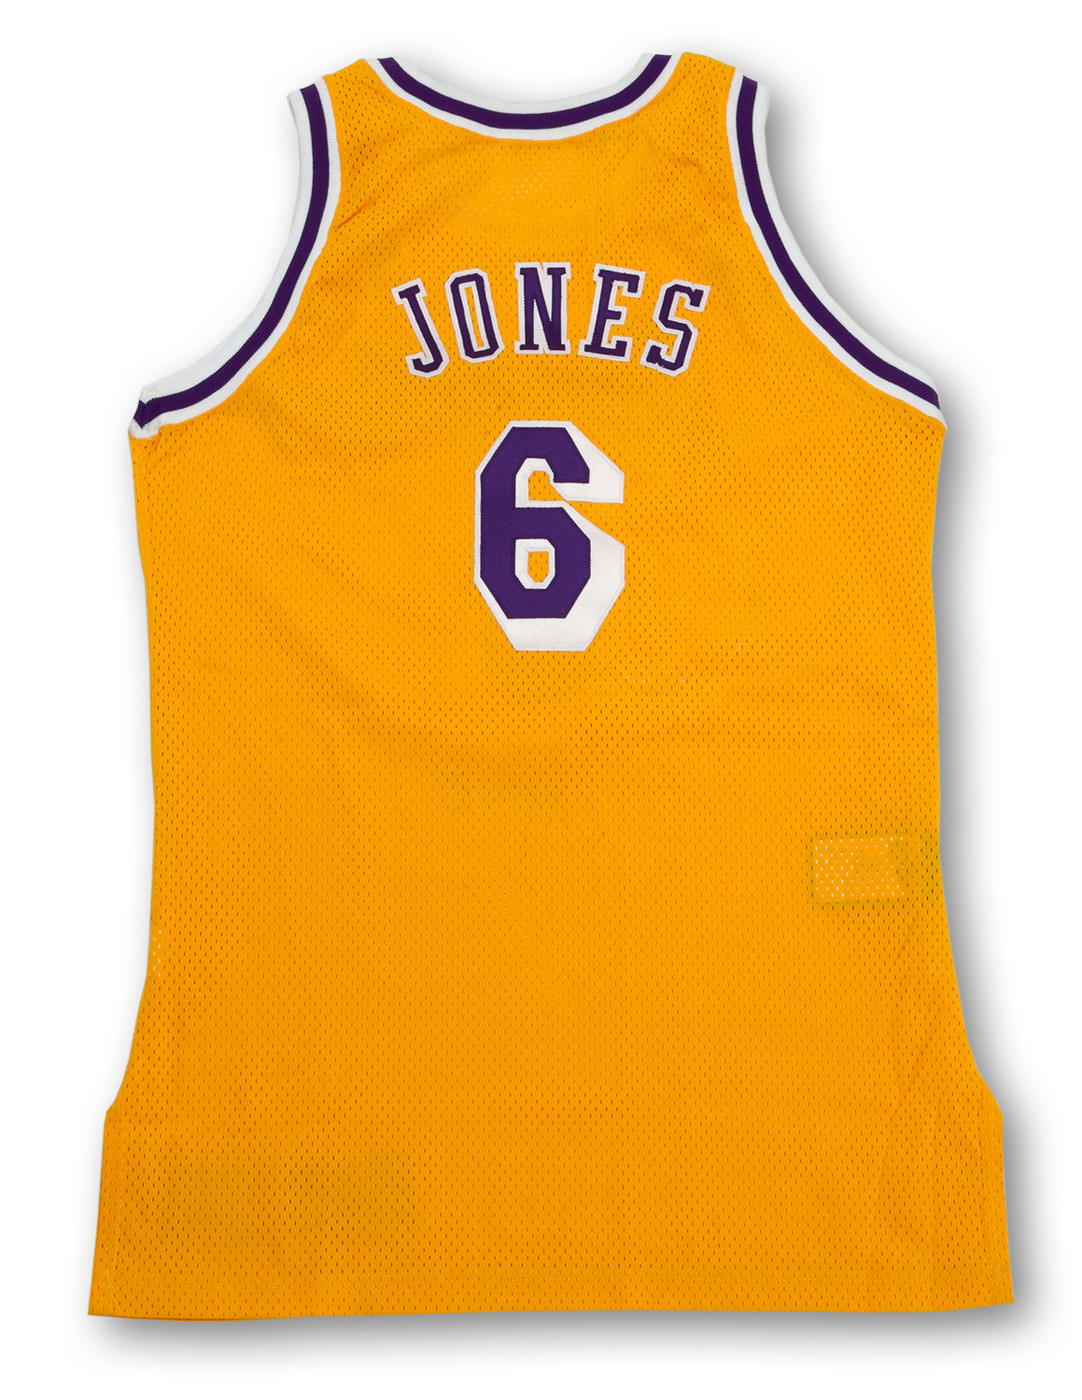 Eddie jones Lakers jersey 94-96 year for Sale in Las Vegas, NV - OfferUp